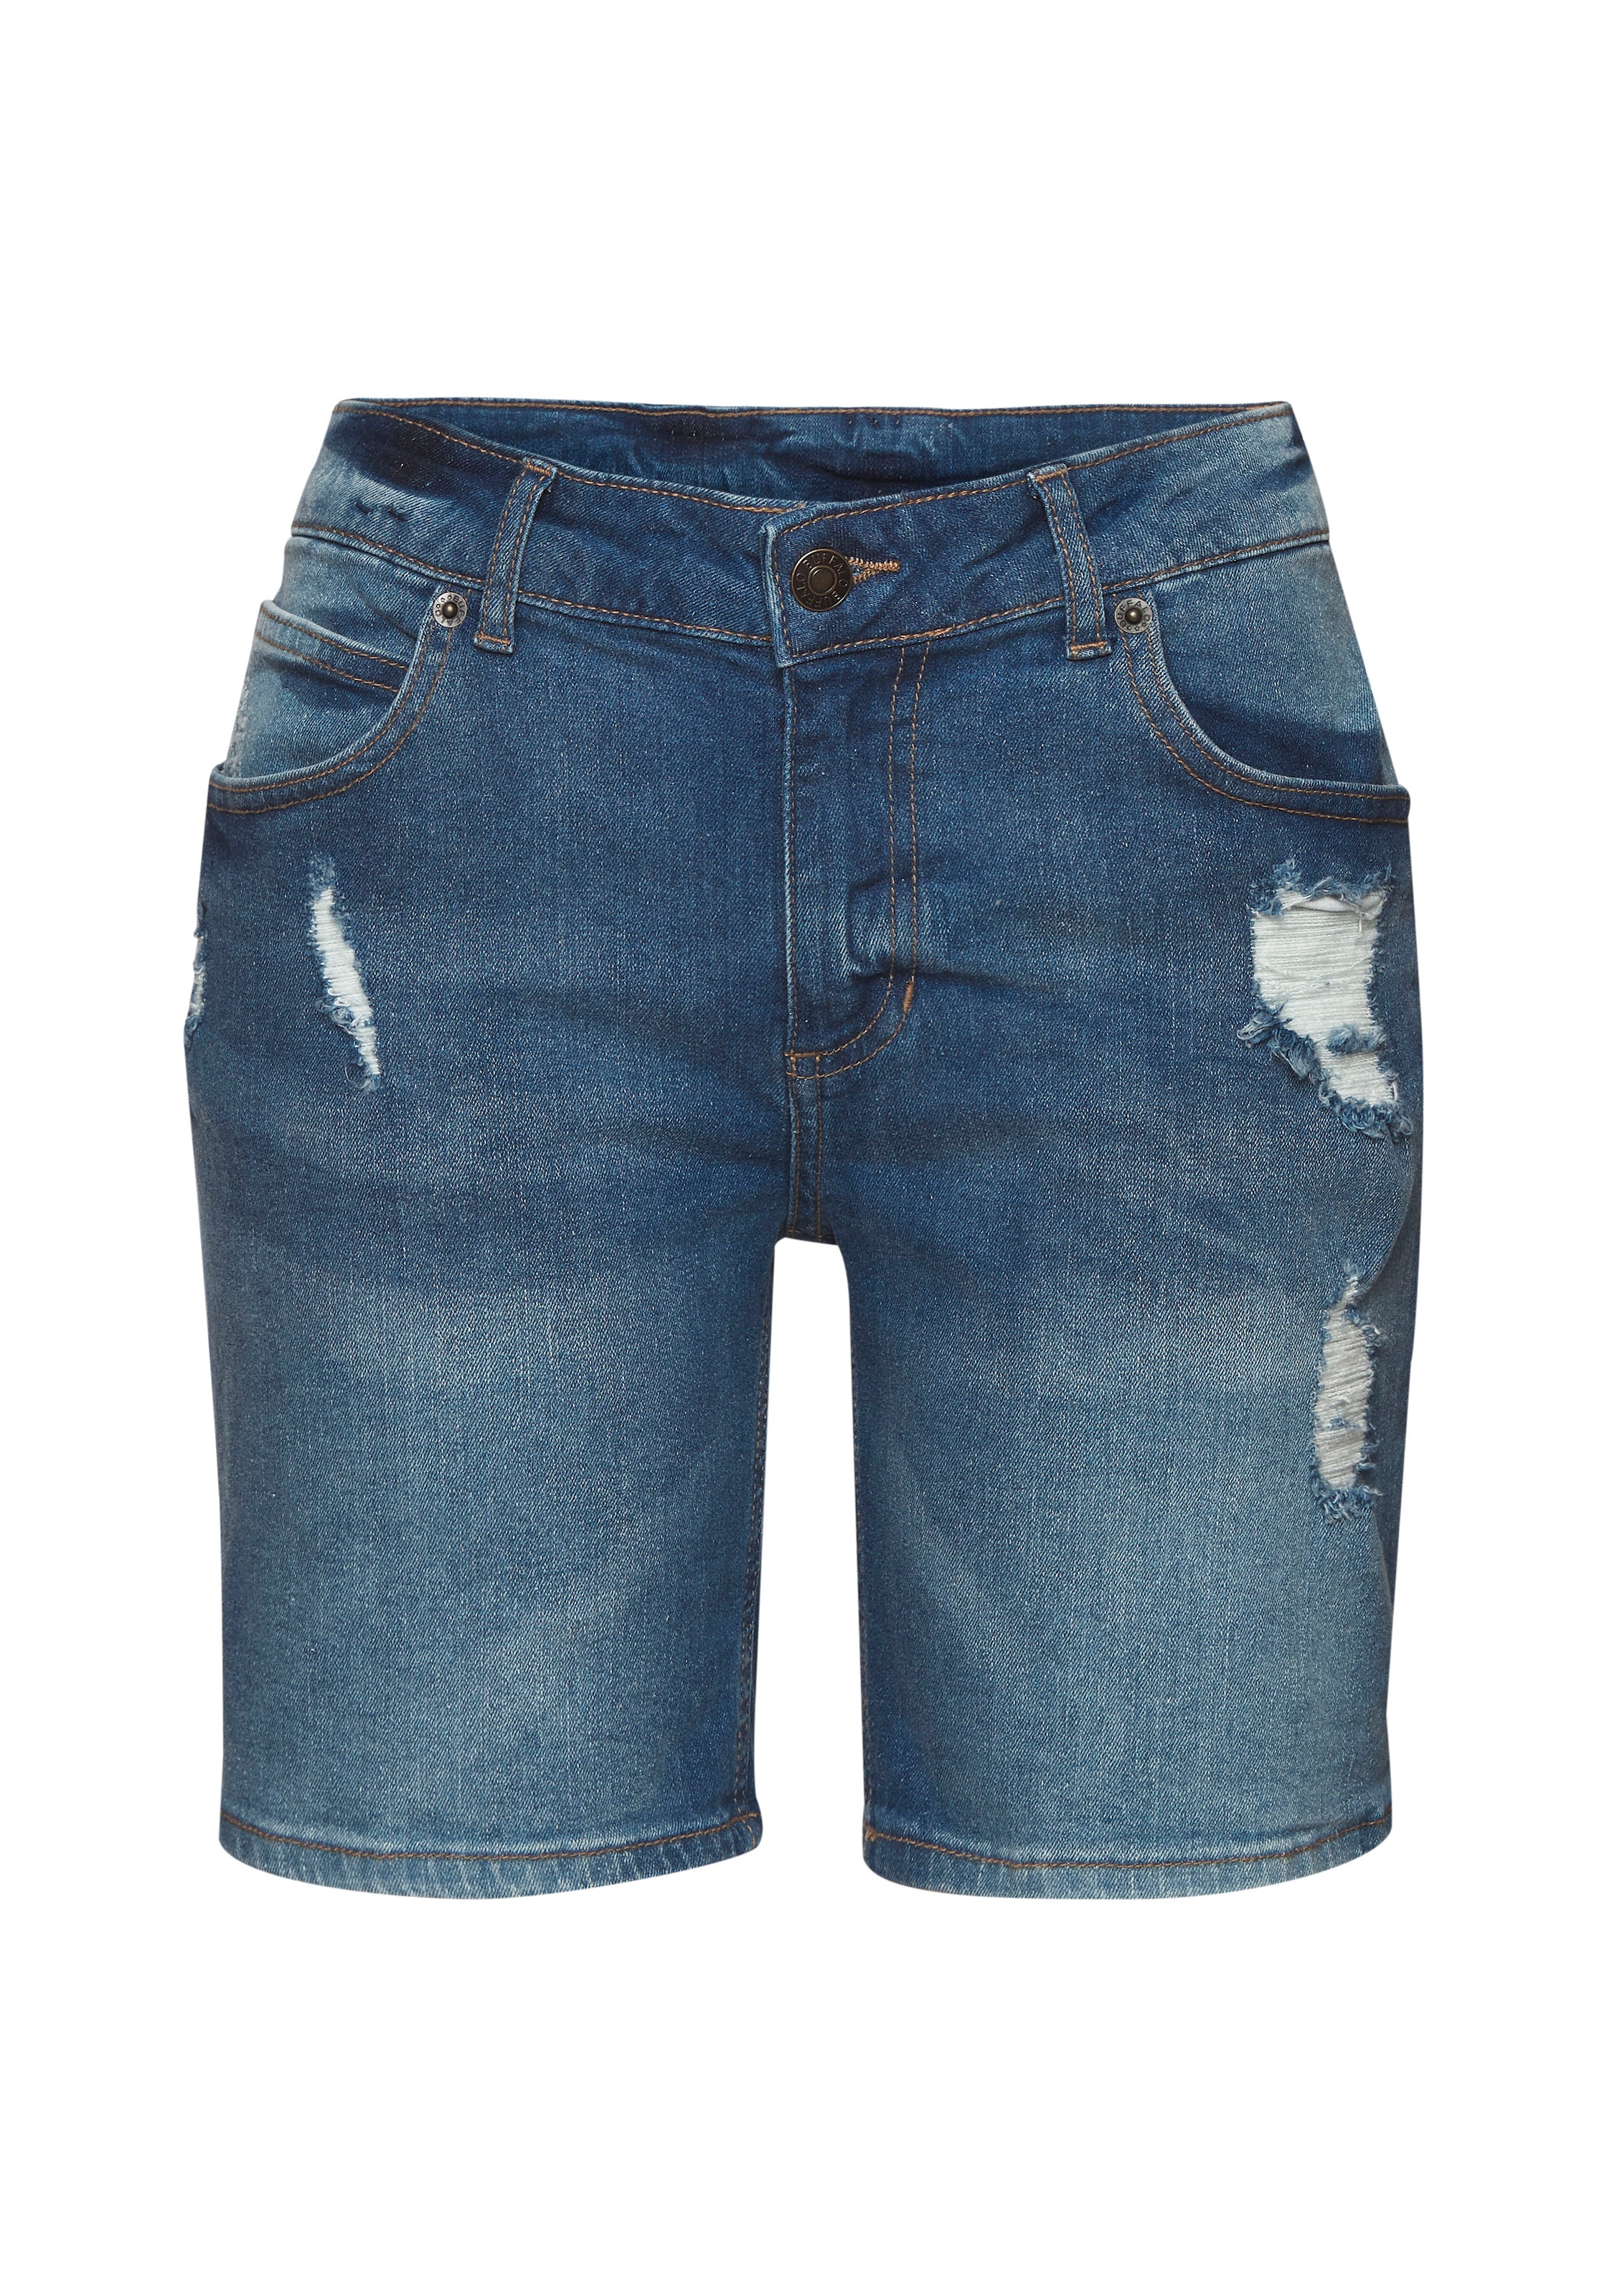 Buffalo Jeansbermudas, mit Destroyed-Effekten, Shorts zum Krempeln, kurze Hose